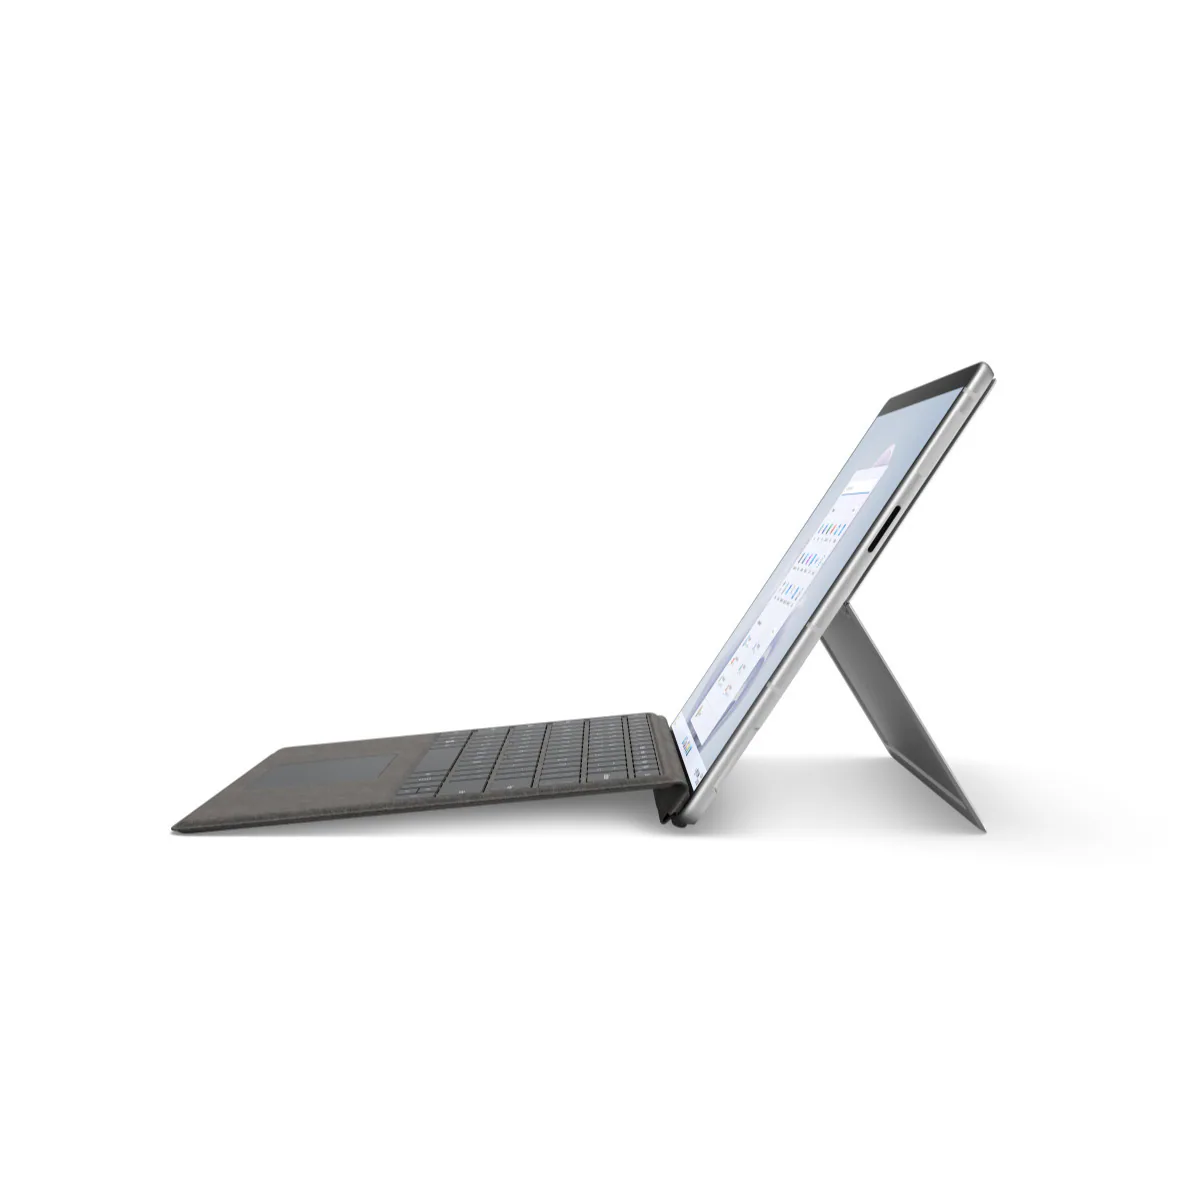 Microsoft Surface Pro 9 Notebook (5G) SQ3 | 16GB RAM |256GB SSD